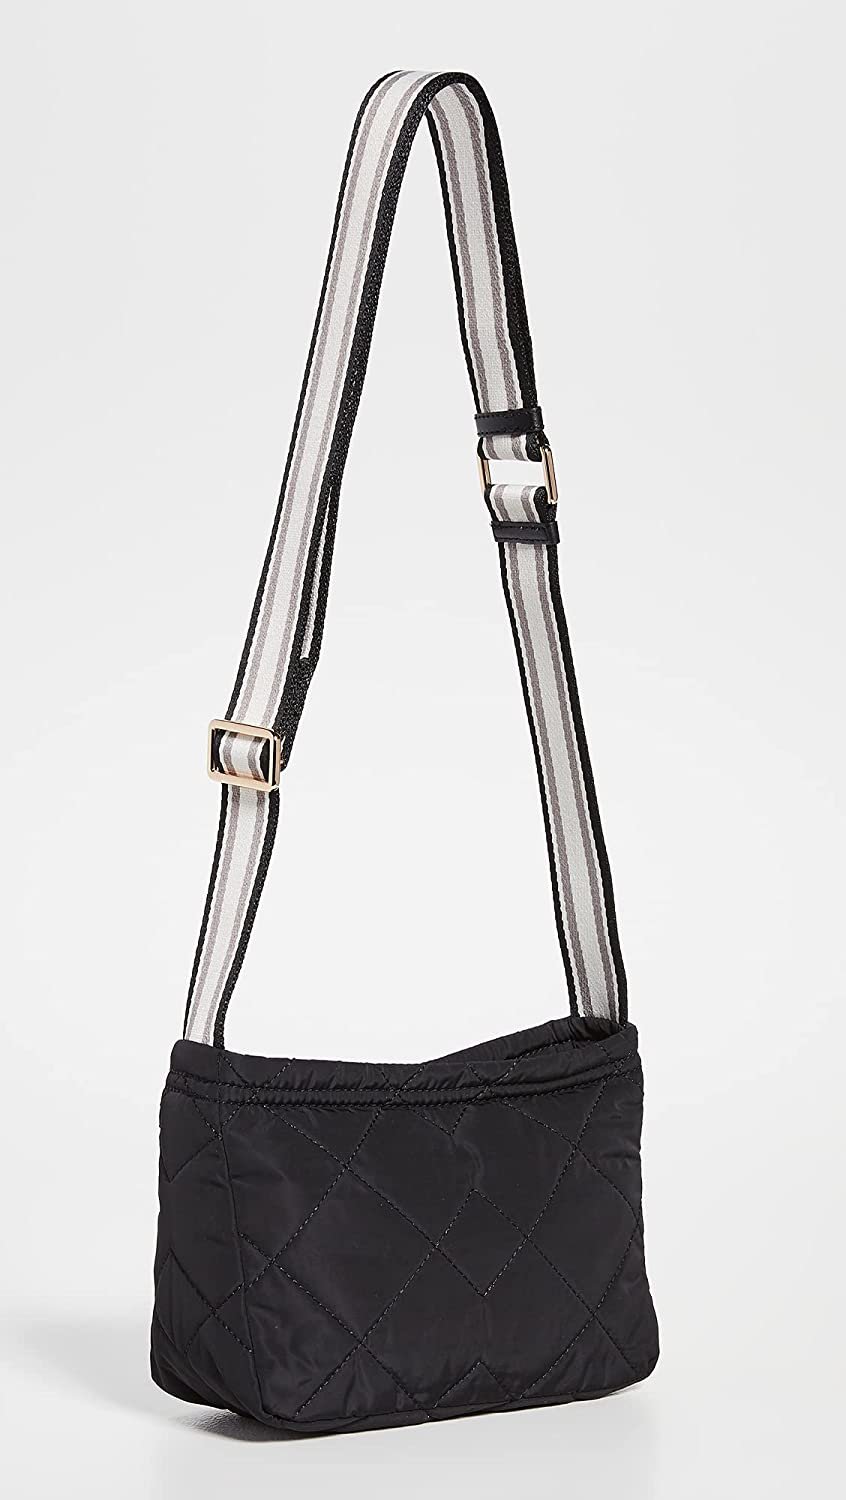 Marc Jacobs Women's Messenger Bag, Black, One Size